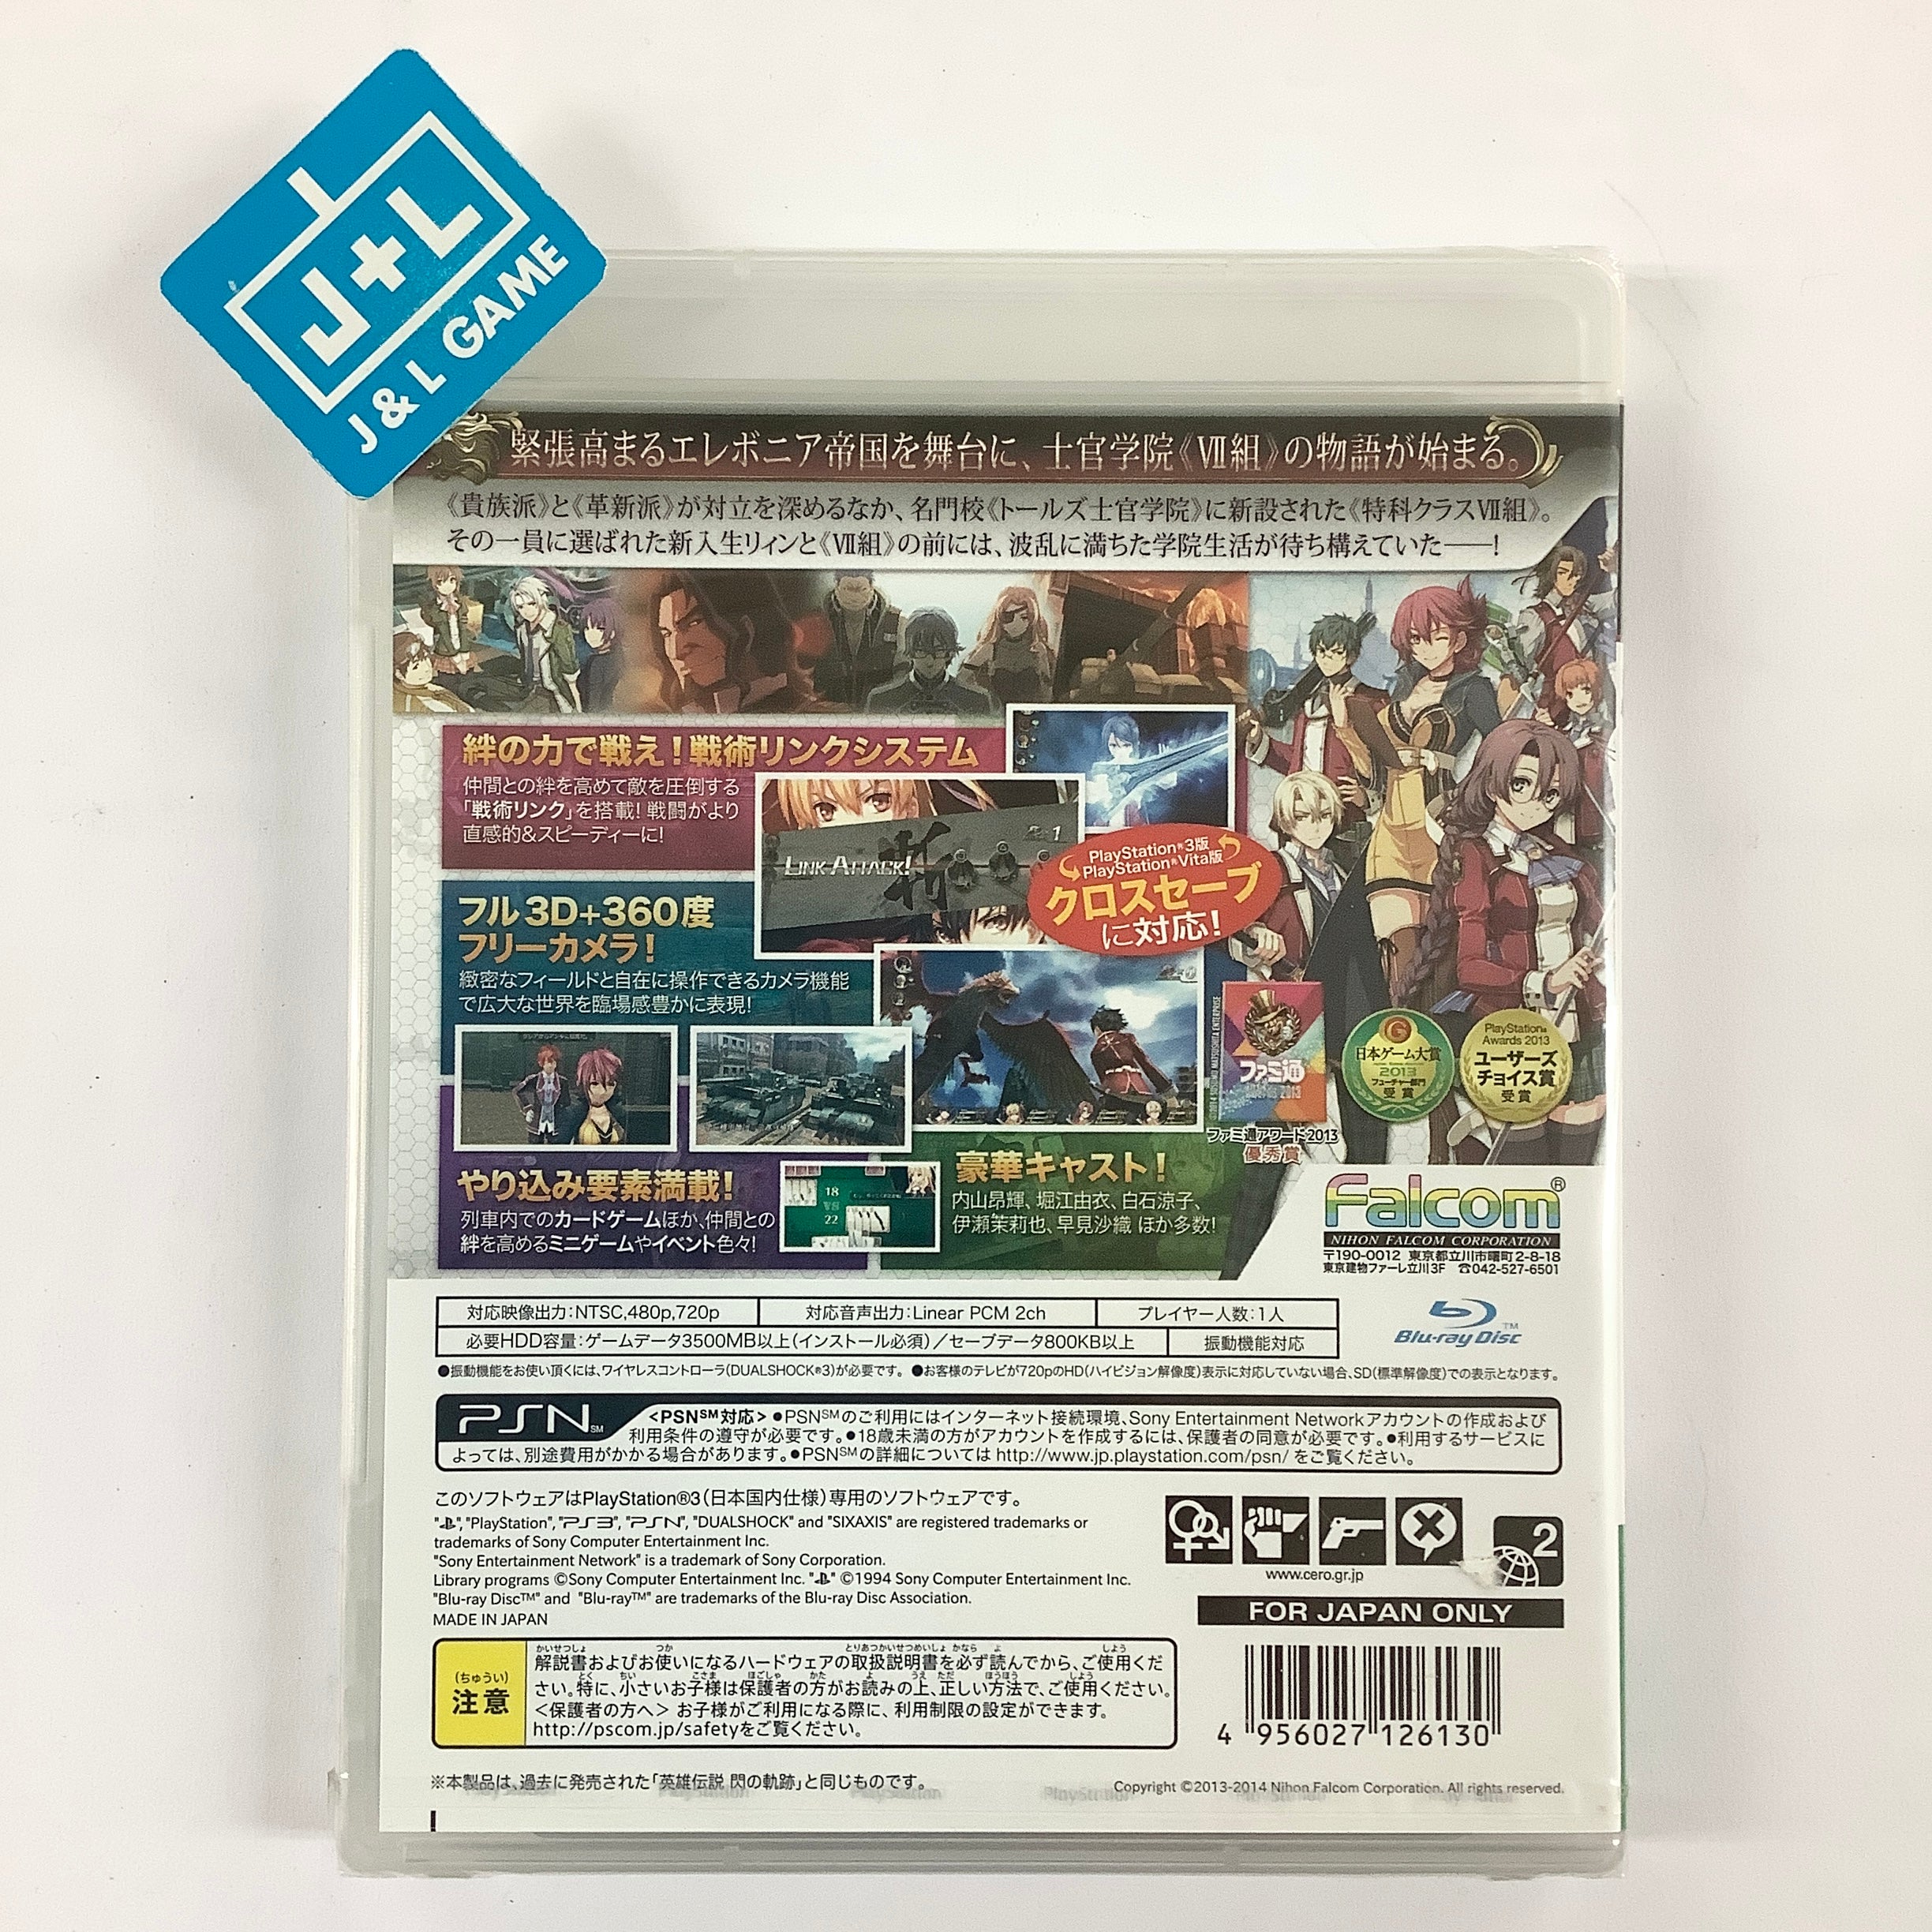 Eiyuu Densetsu: Sen no Kiseki (Super Price) - (PS3) PlayStation 3 (Japanese Import) Video Games Falcom   